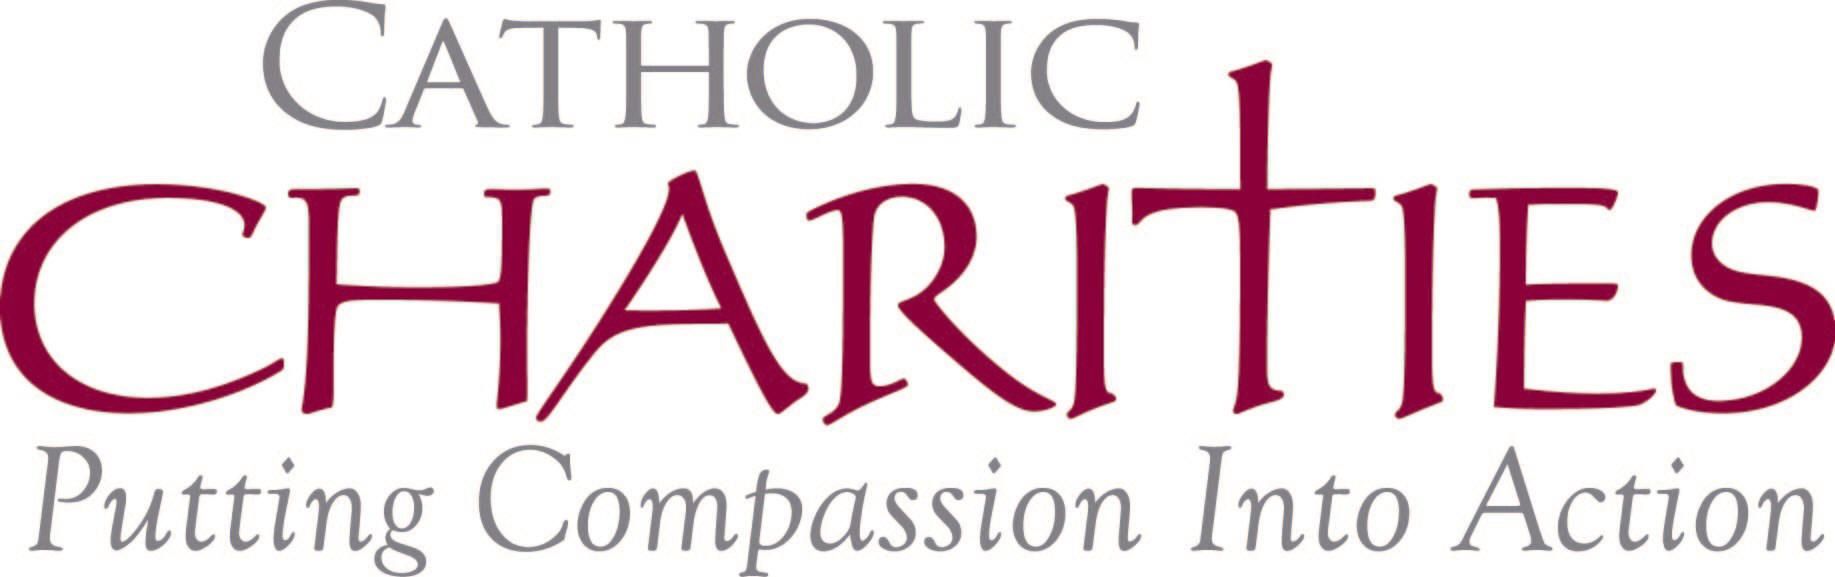 Image result for catholic charities jax logo